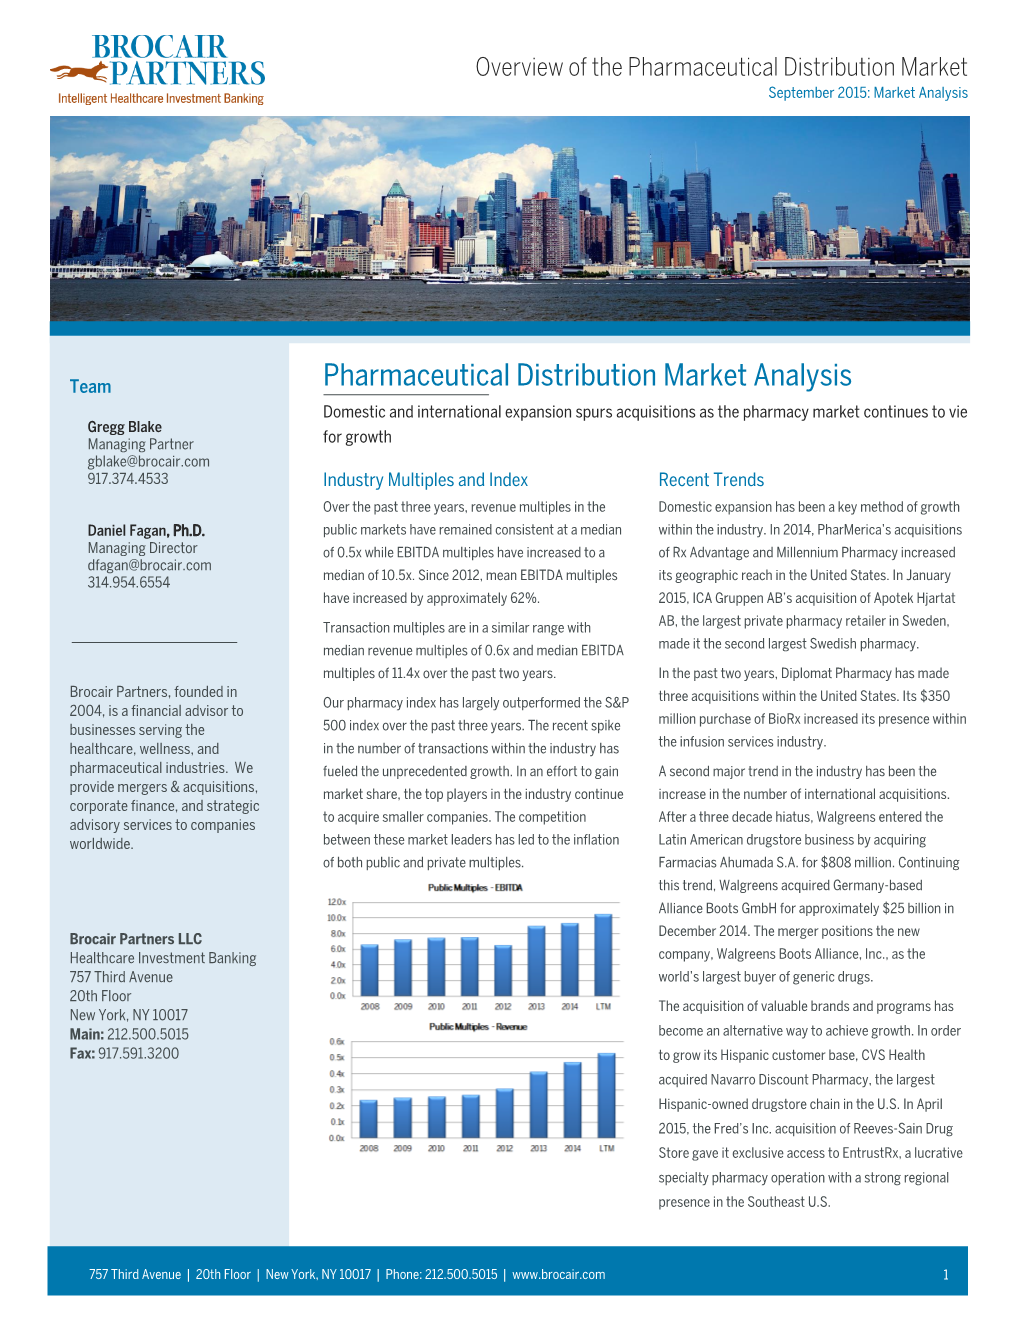 Pharmaceutical Distribution Market Analysis